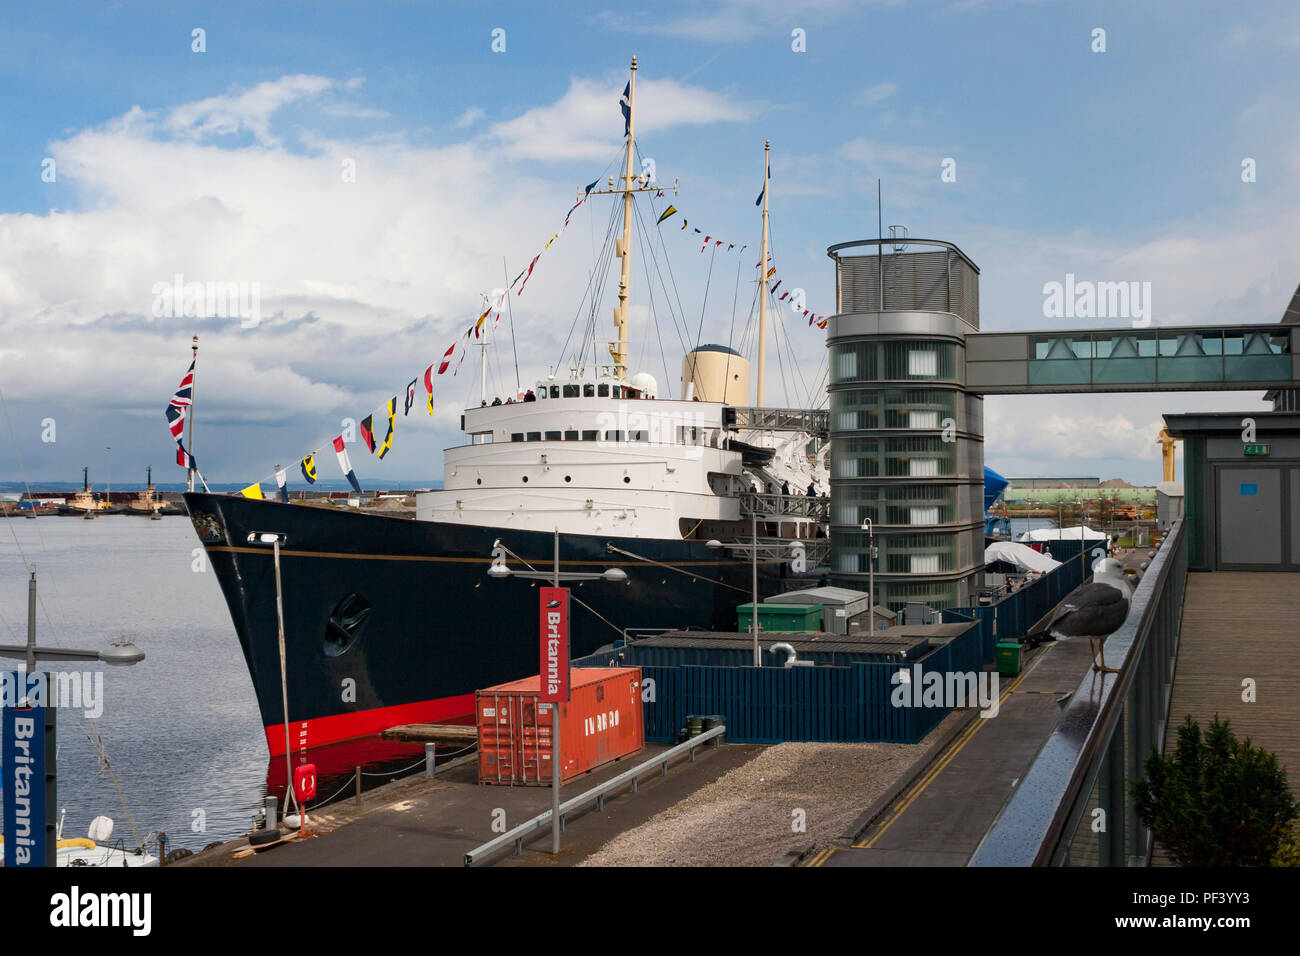 The Royal Yacht Brittania, berthed at Ocean Terminal, Leith, Edinburgh Stock Photo